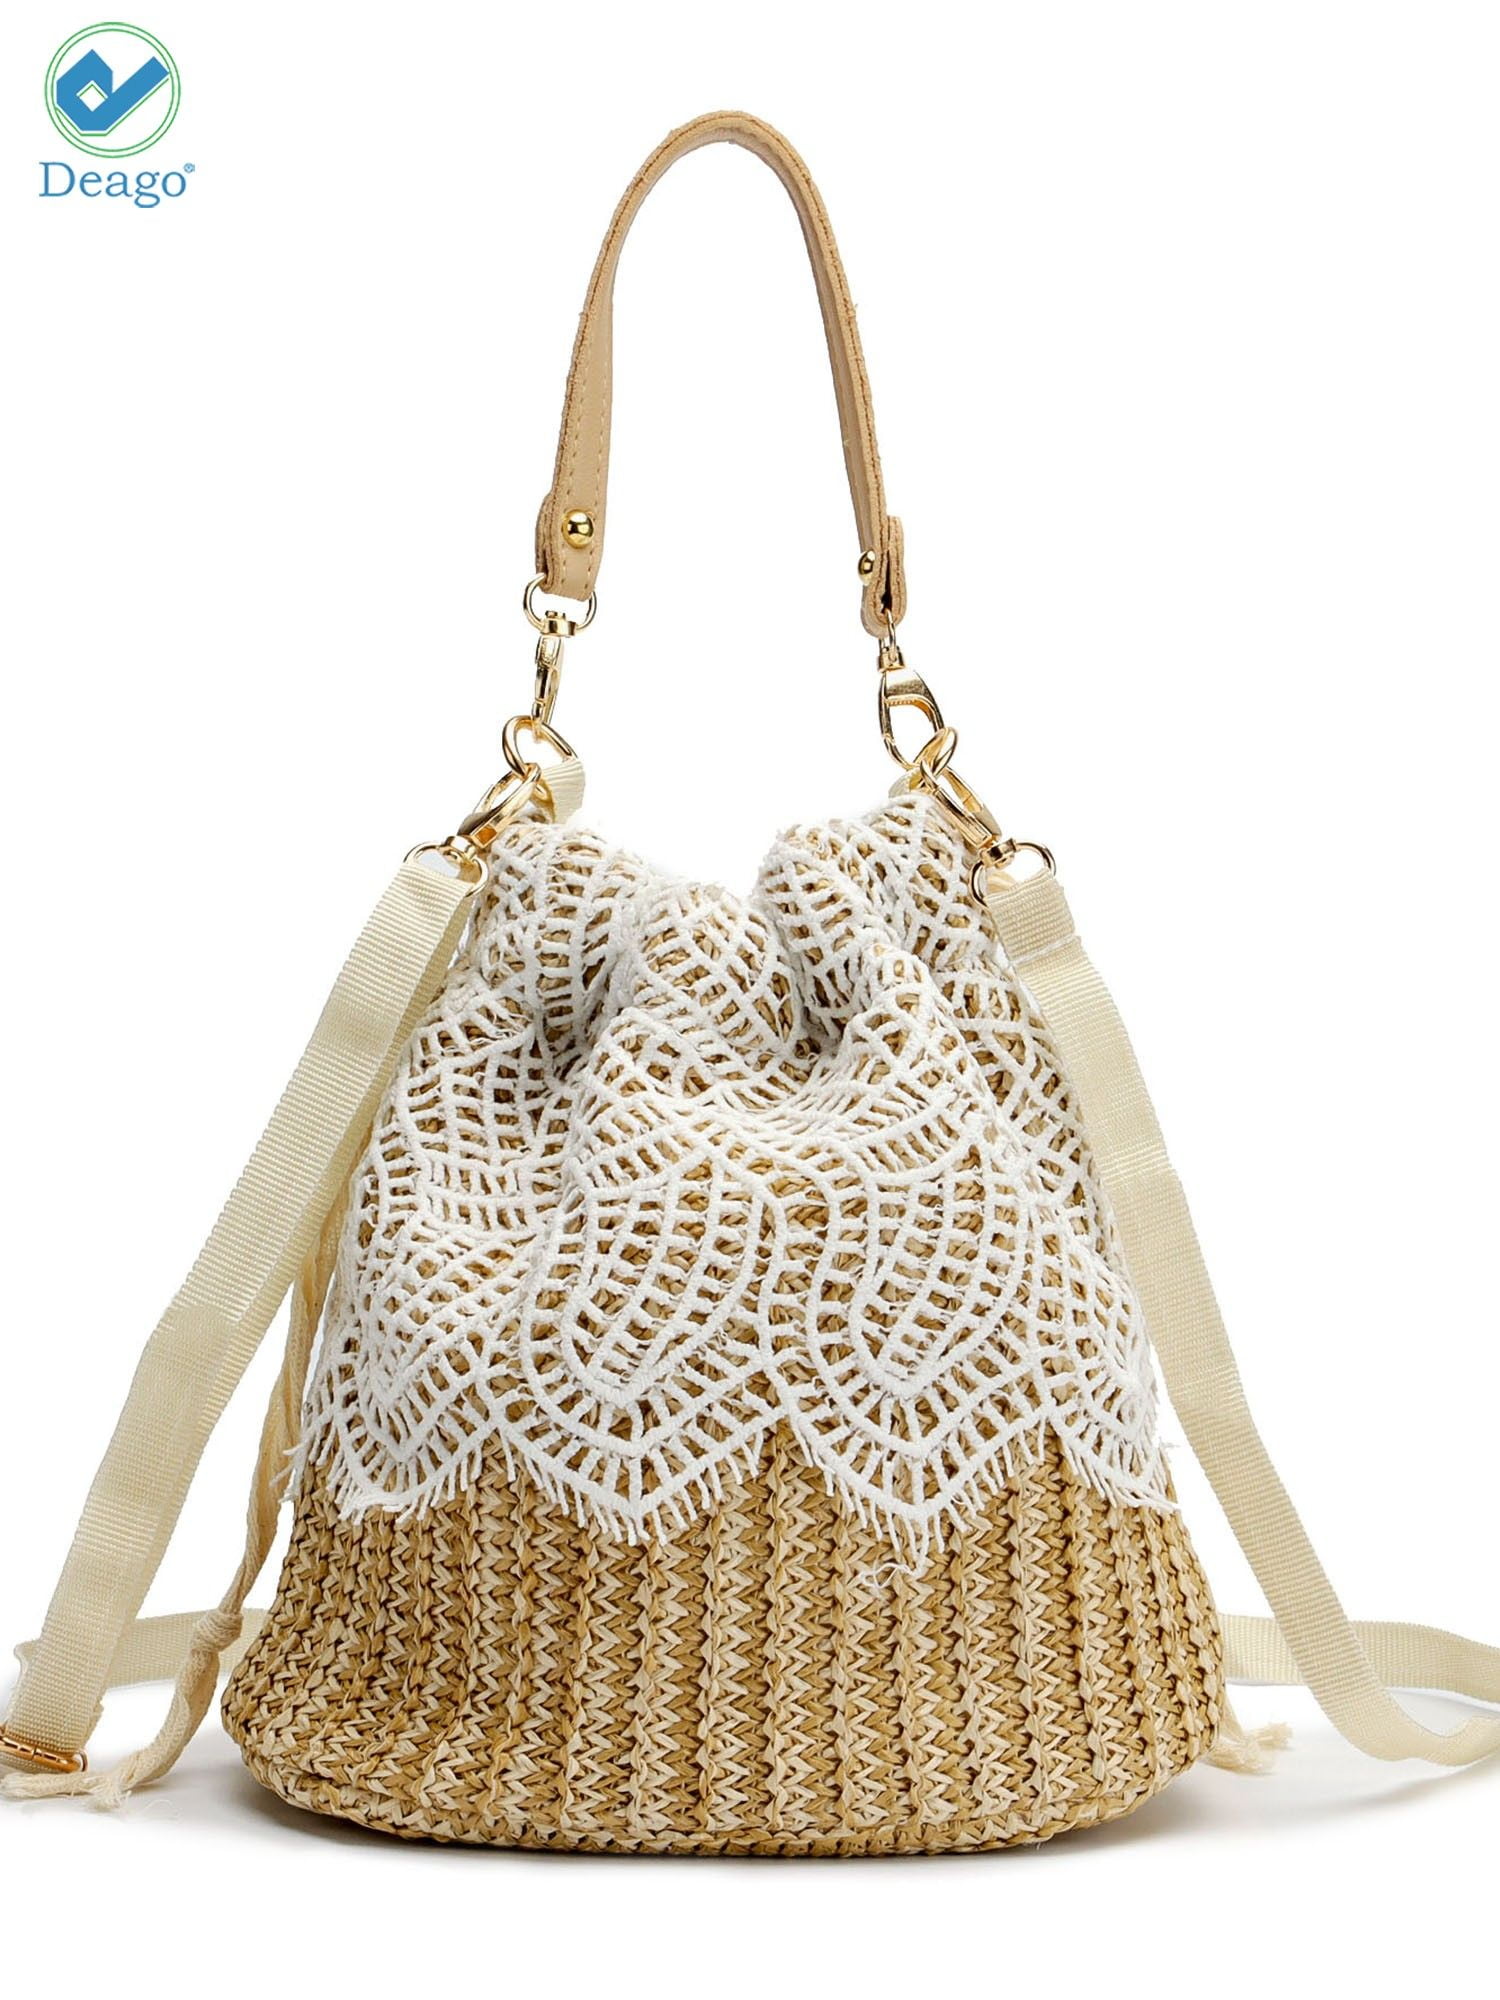 Straw Summer Shopping Beach Weave Woven Shoulder Bag Tote Purse Handbag 2019 New 